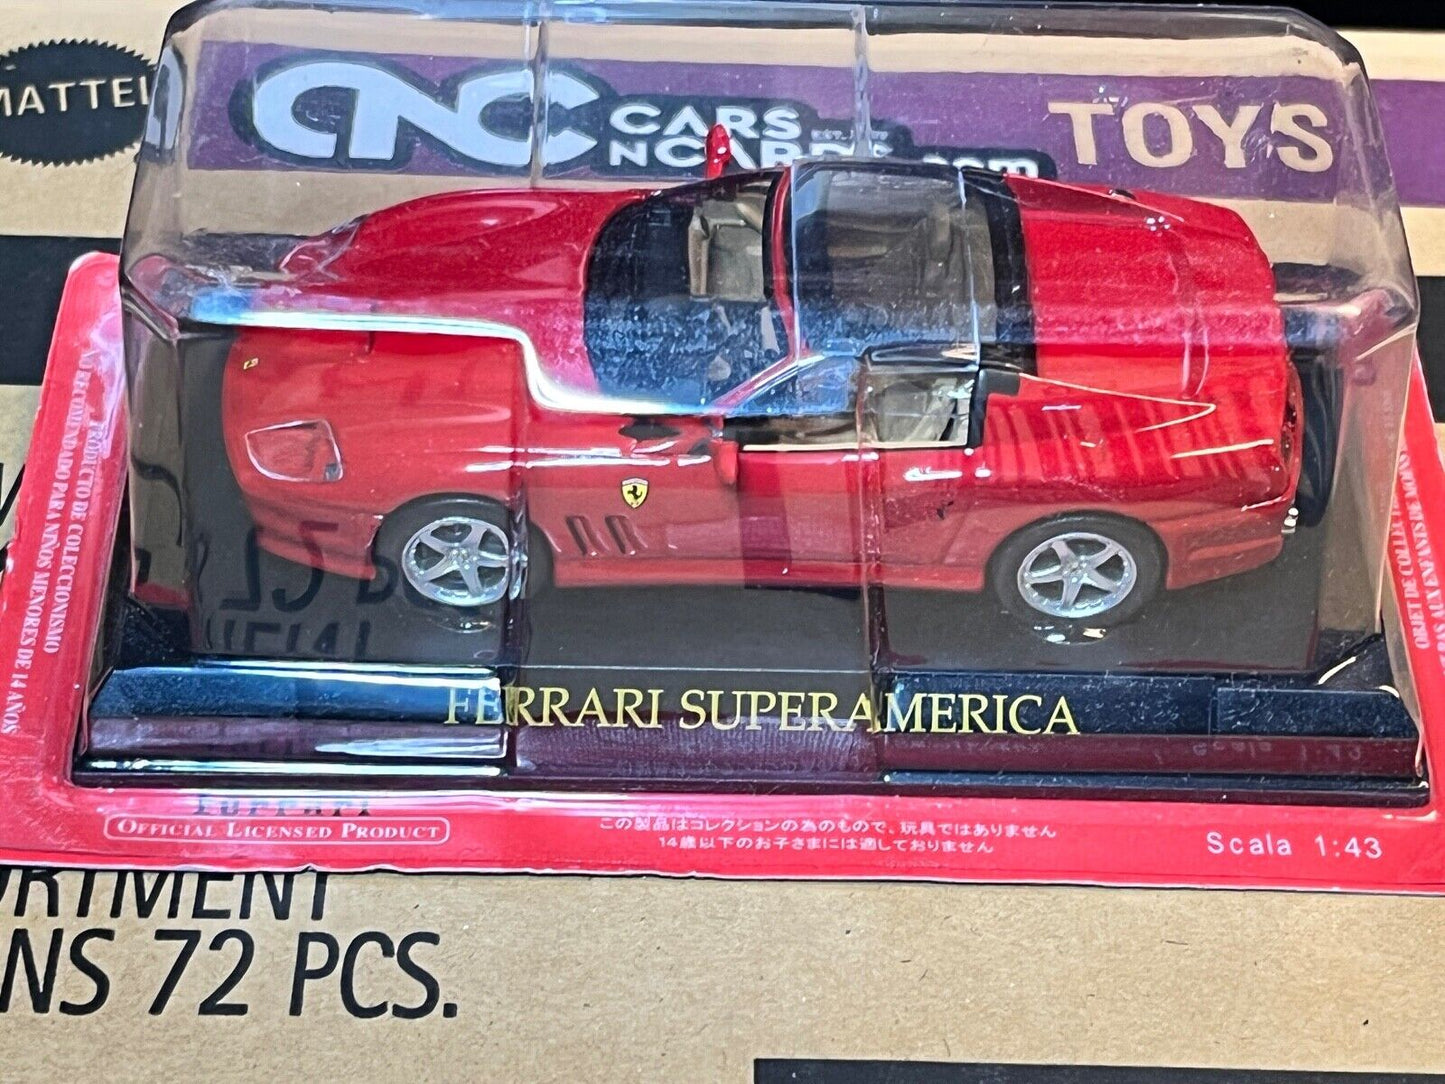 Ferrari Collection F1 Ferrari Super America 1/43 Scale Mini Car Display Diecast